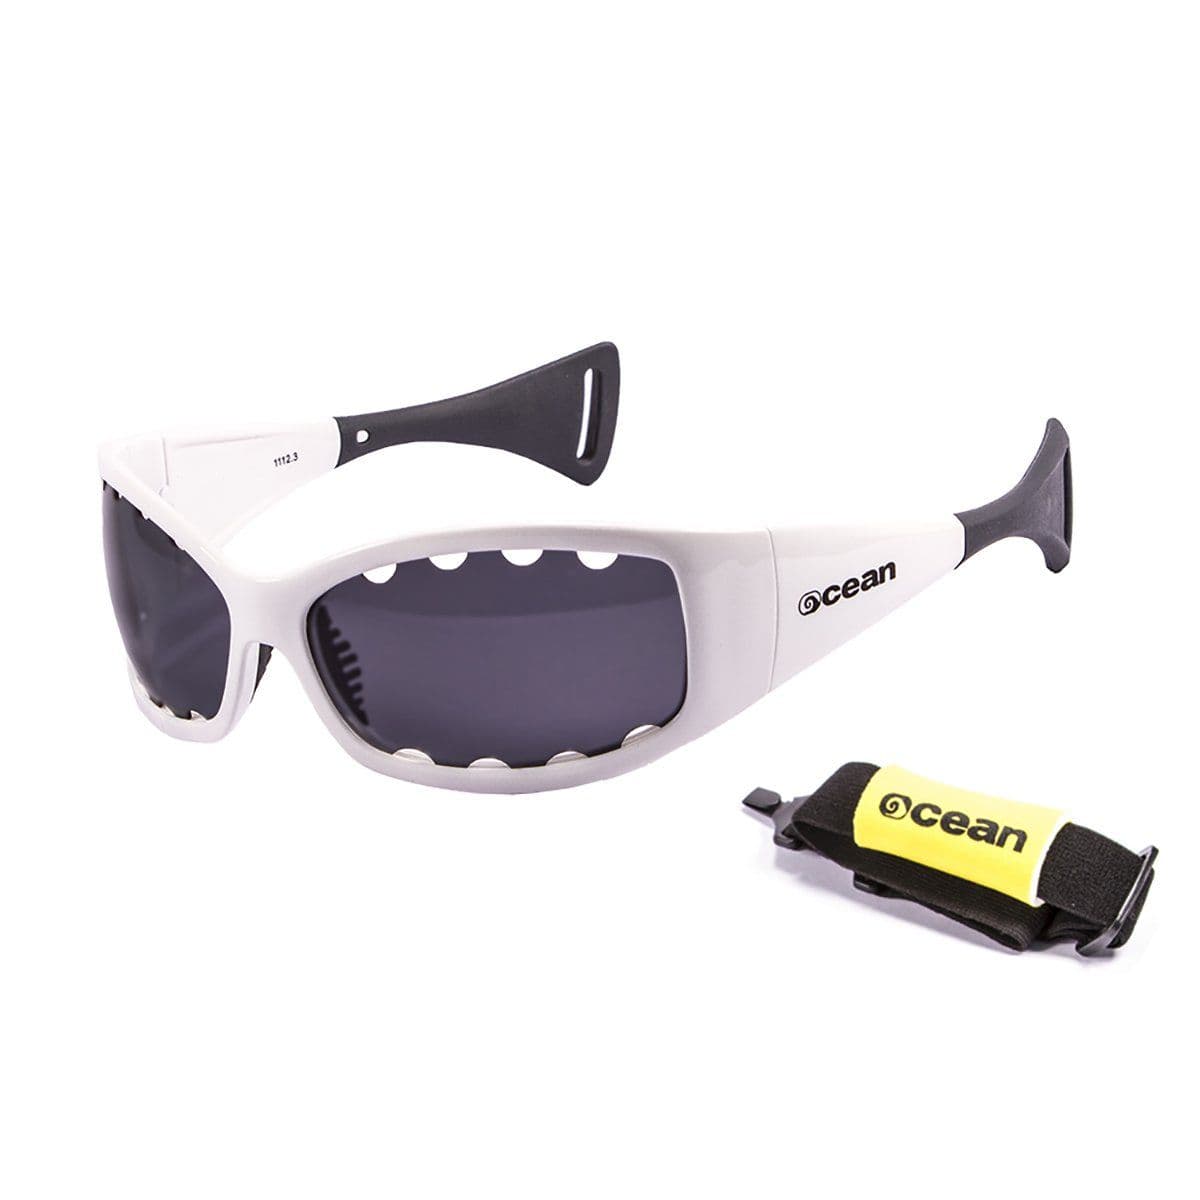 Ocean Fuerteventura Water Sport Sunglasses